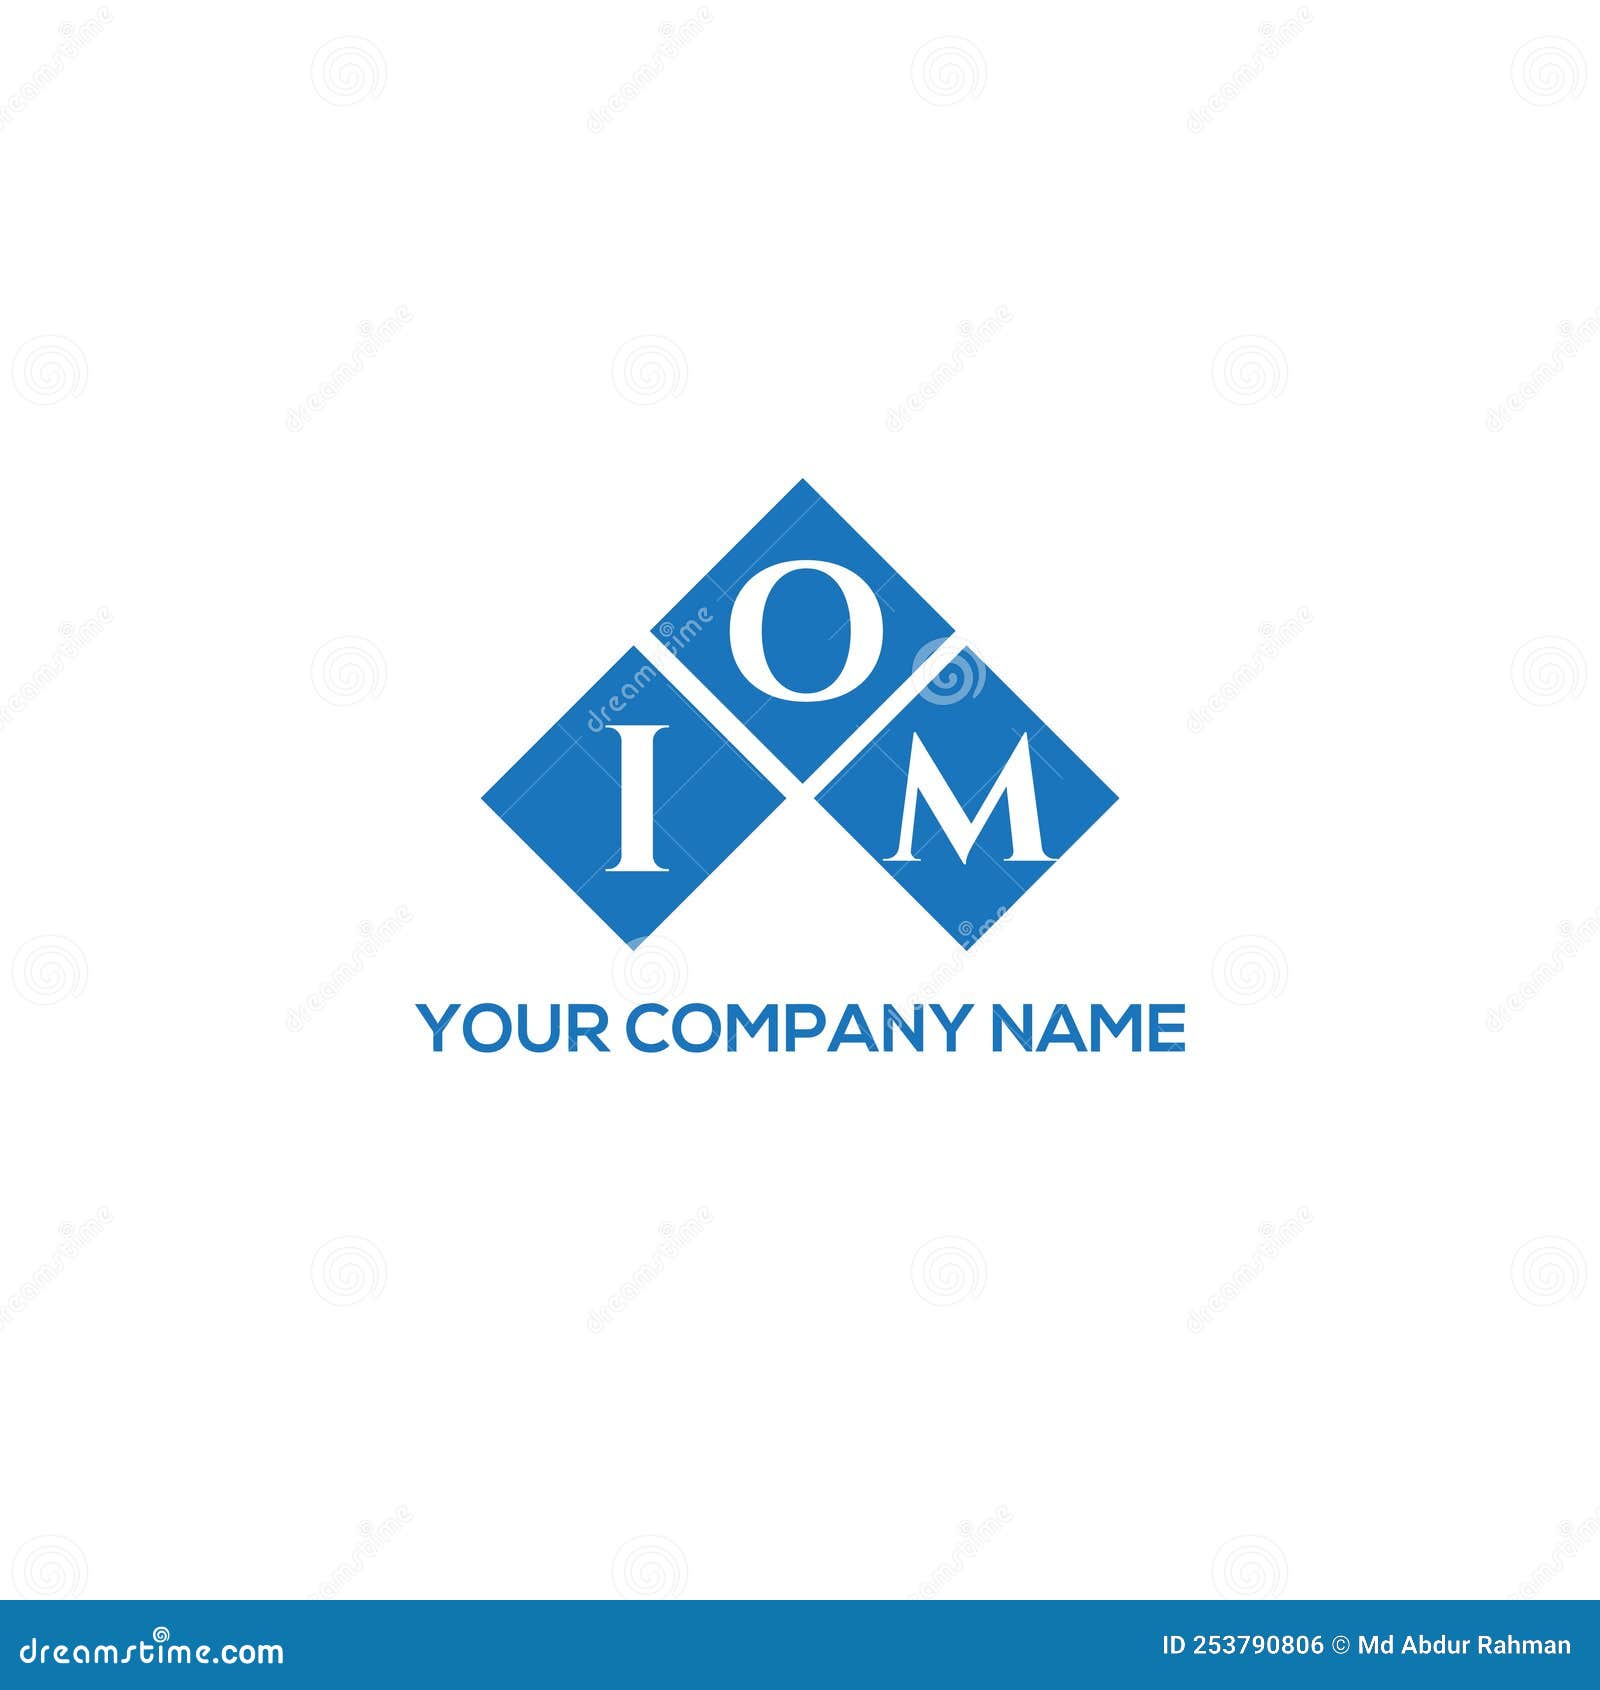 iom letter logo  on white background. iom creative initials letter logo concept.